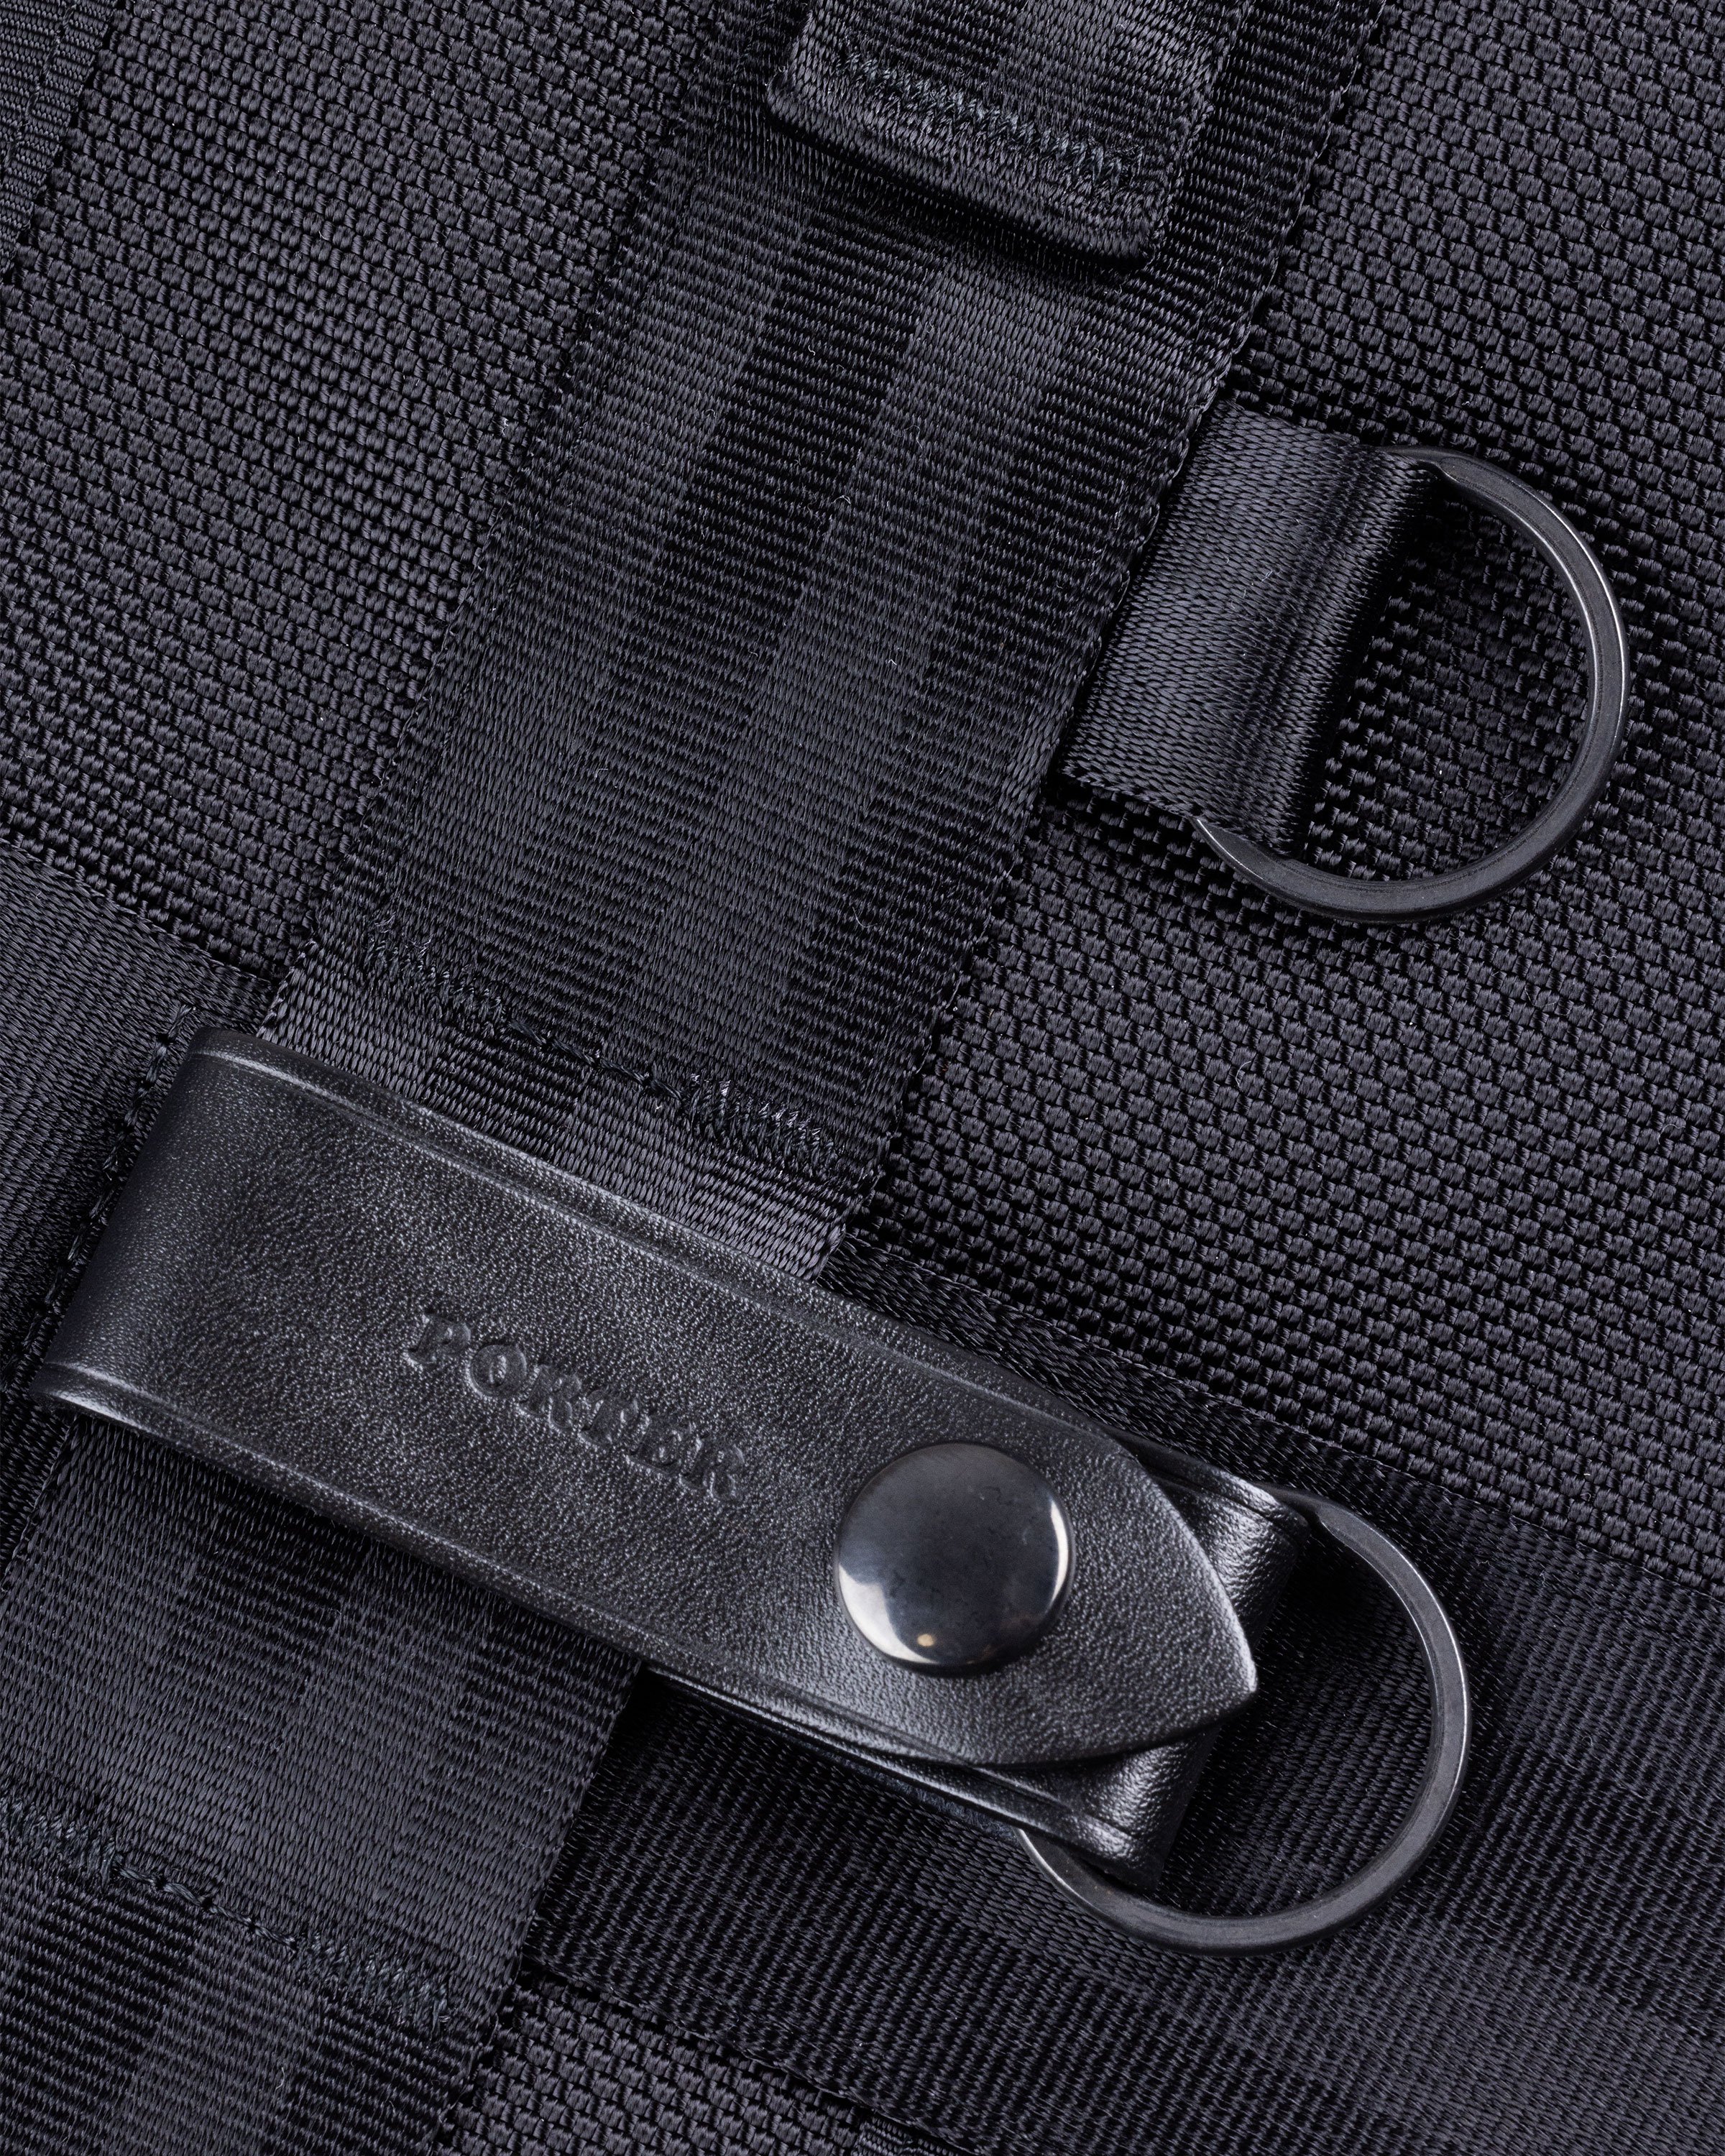 Porter-Yoshida & Co. - Heat Messenger Bag Black - Accessories - Black - Image 6